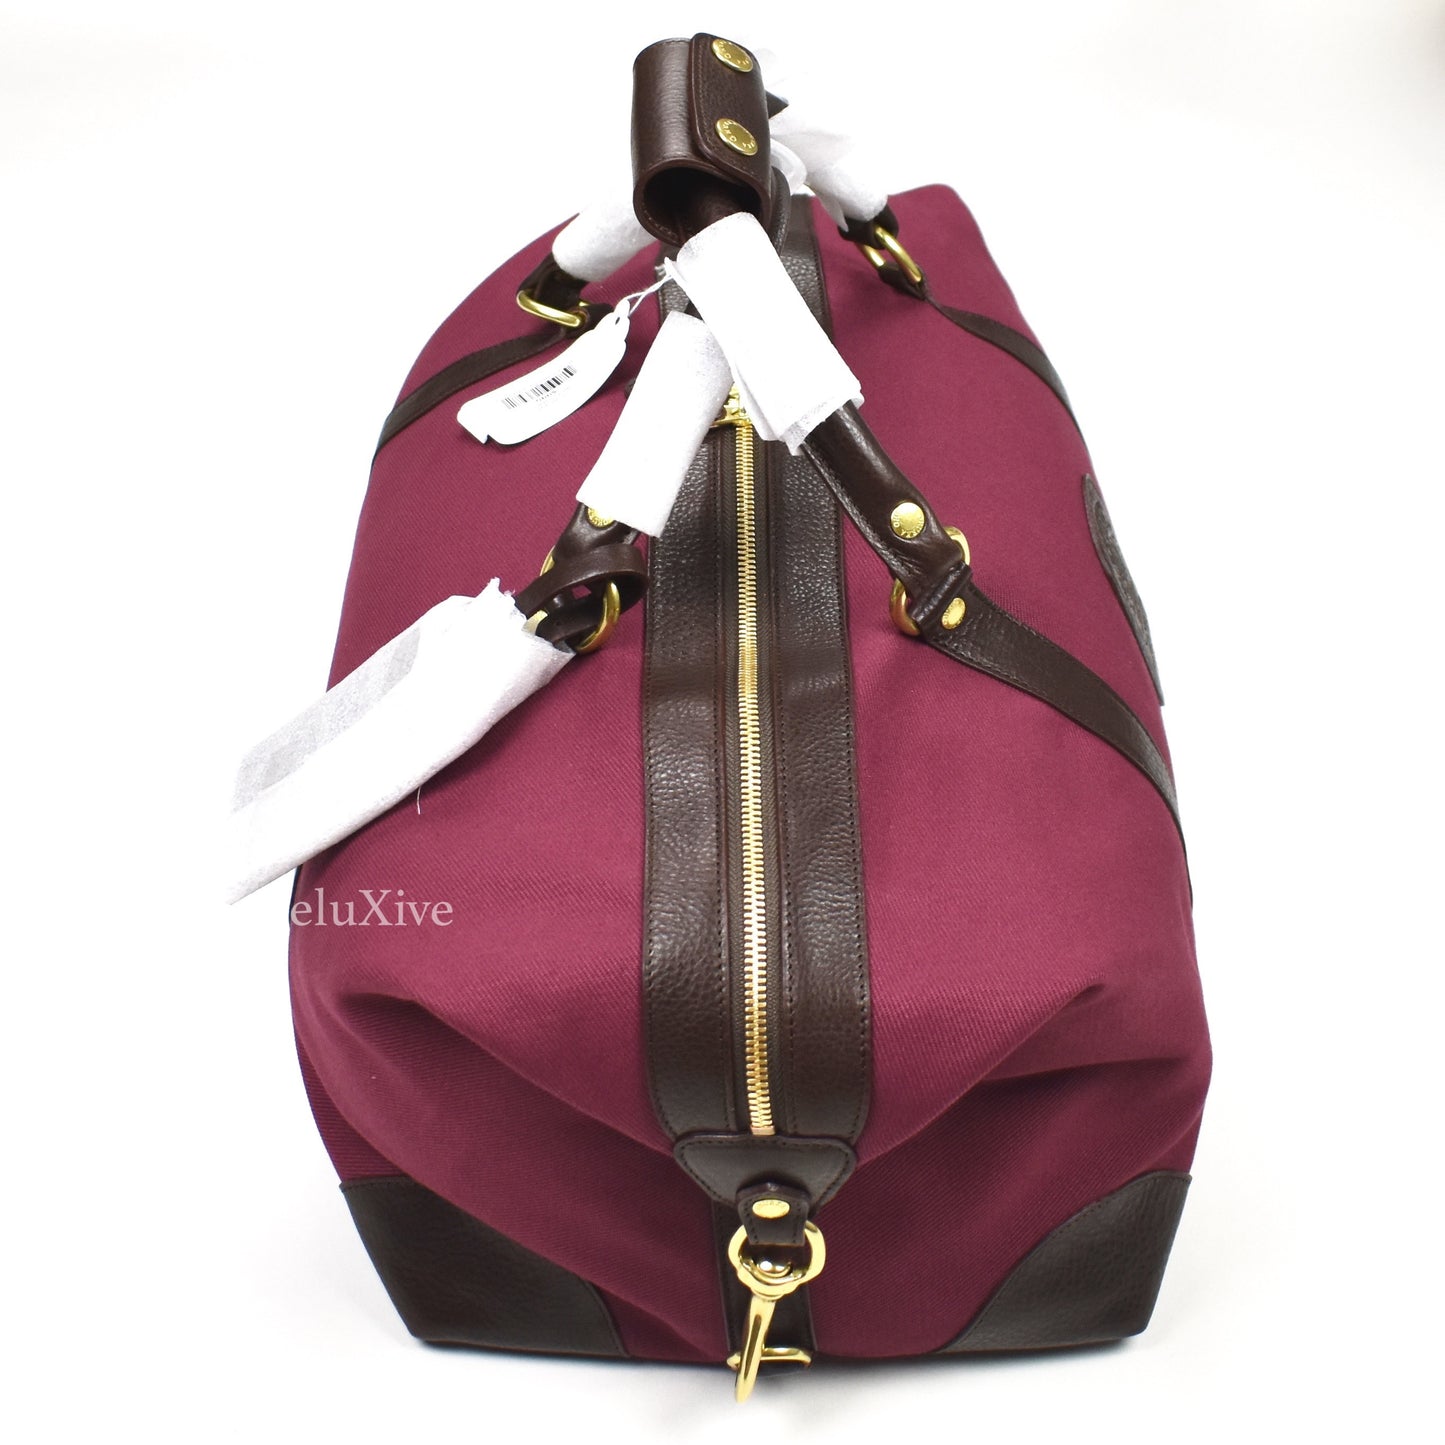 Ghurka - Leather & Canvas Cavelier I No. 96 Duffle Bag (Burgundy)